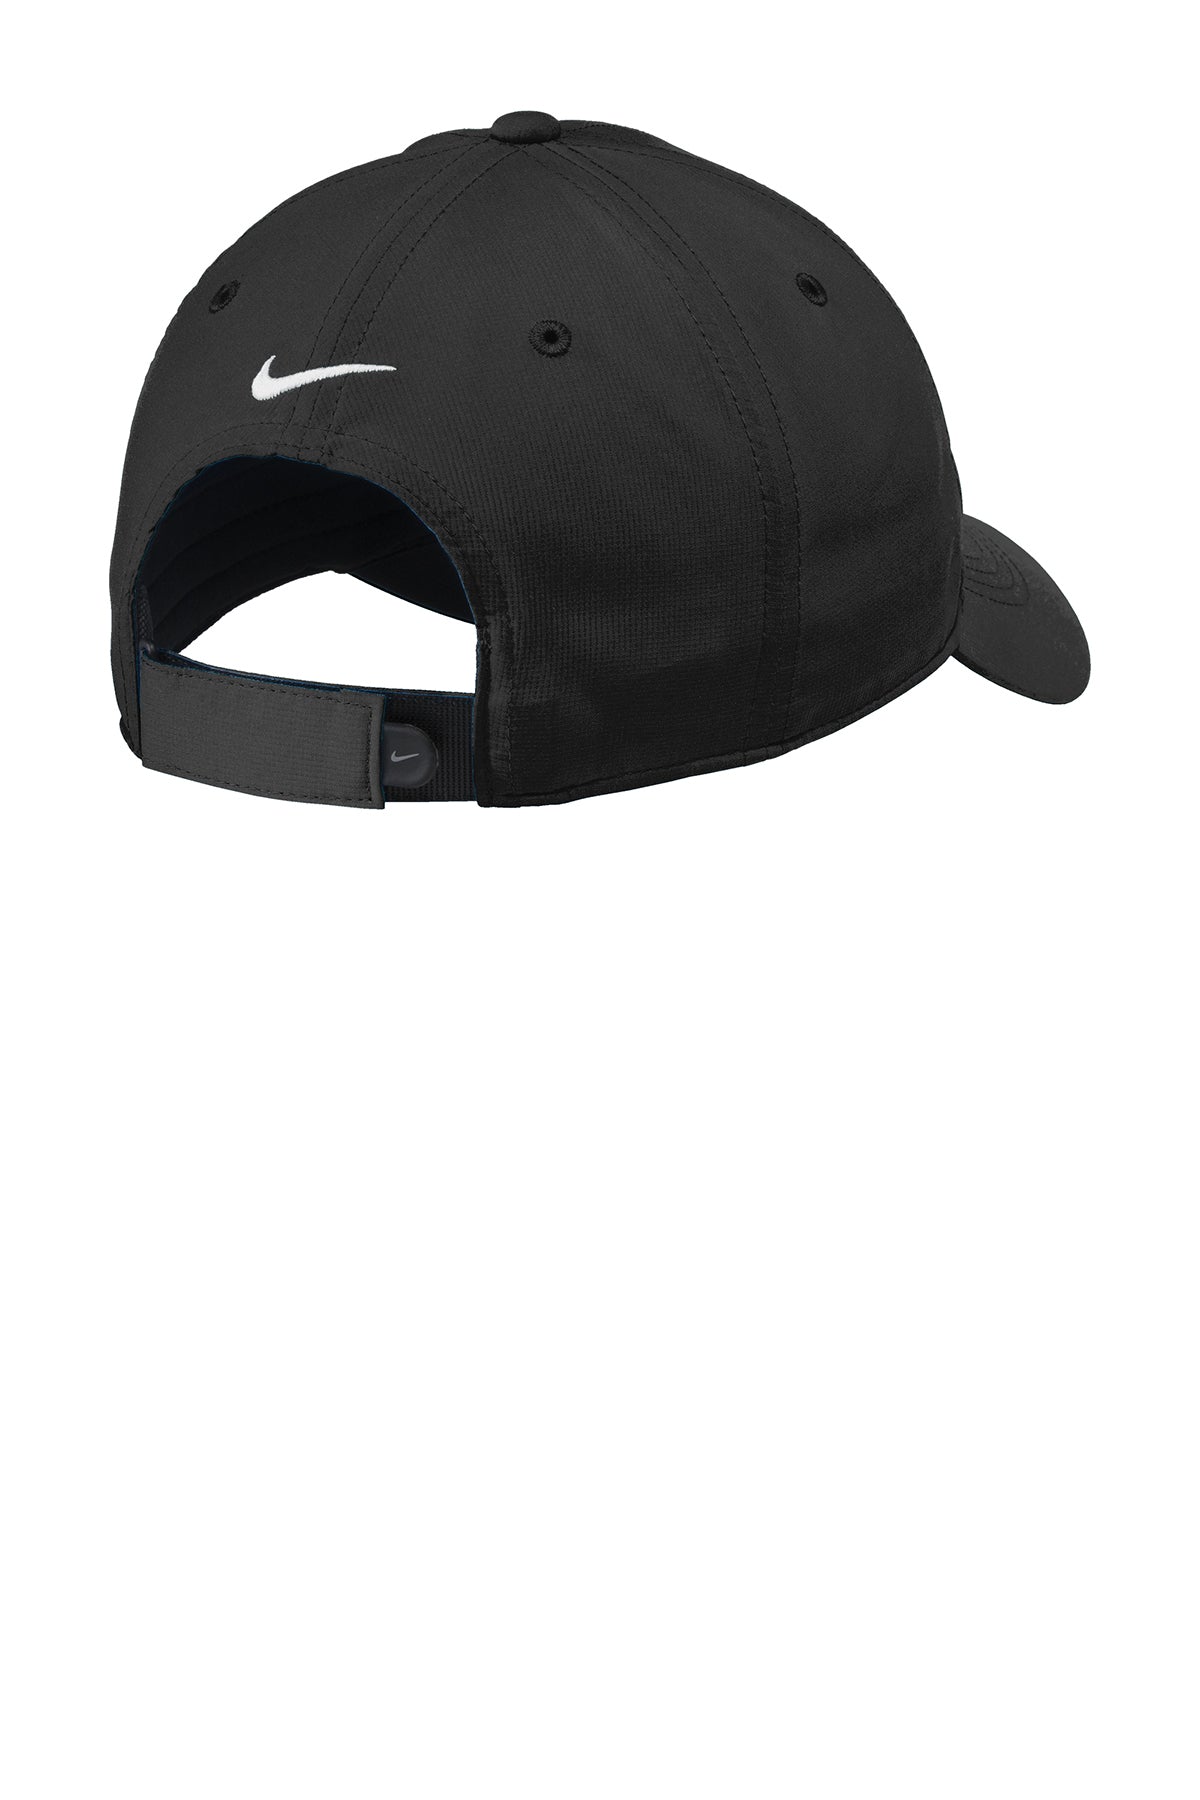 Nike Dri-FIT Tech Custom Caps, Black